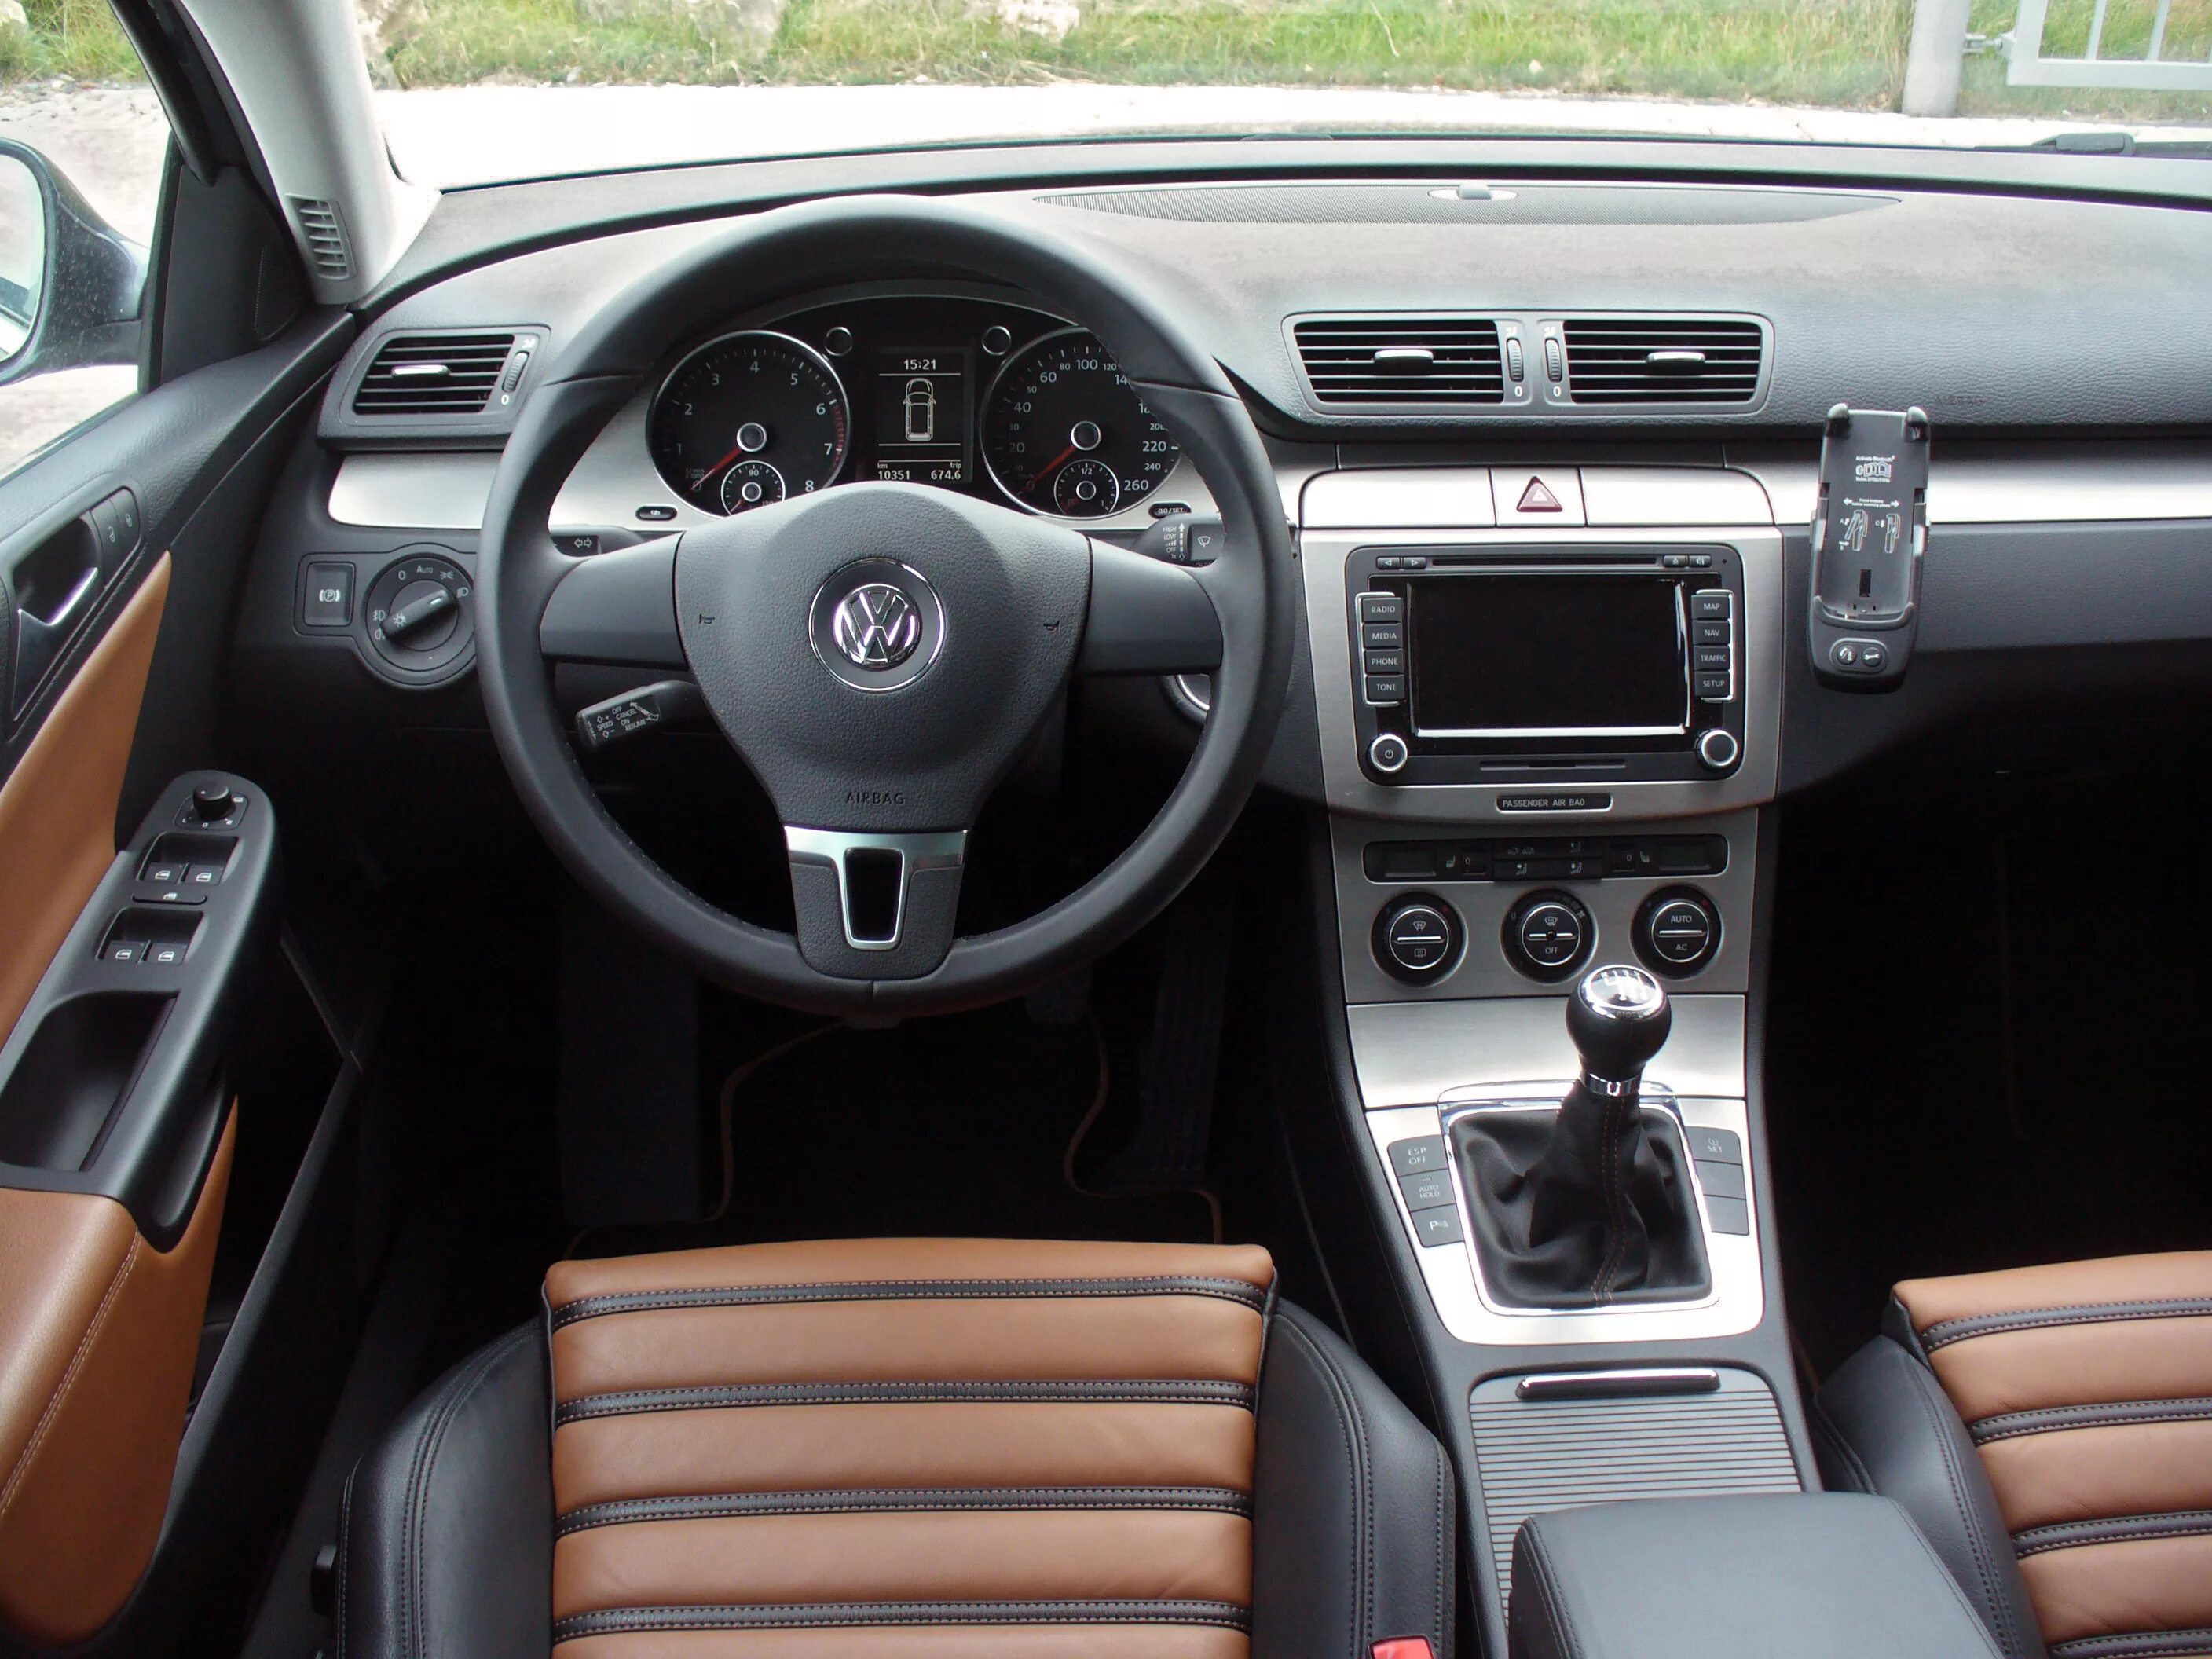 Открыть пассат б6. Фольксваген Пассат b6 салон. Volkswagen Passat b6 Interior. Volkswagen Passat b6 салон. Фольксваген Пассат б6 2007 салон.